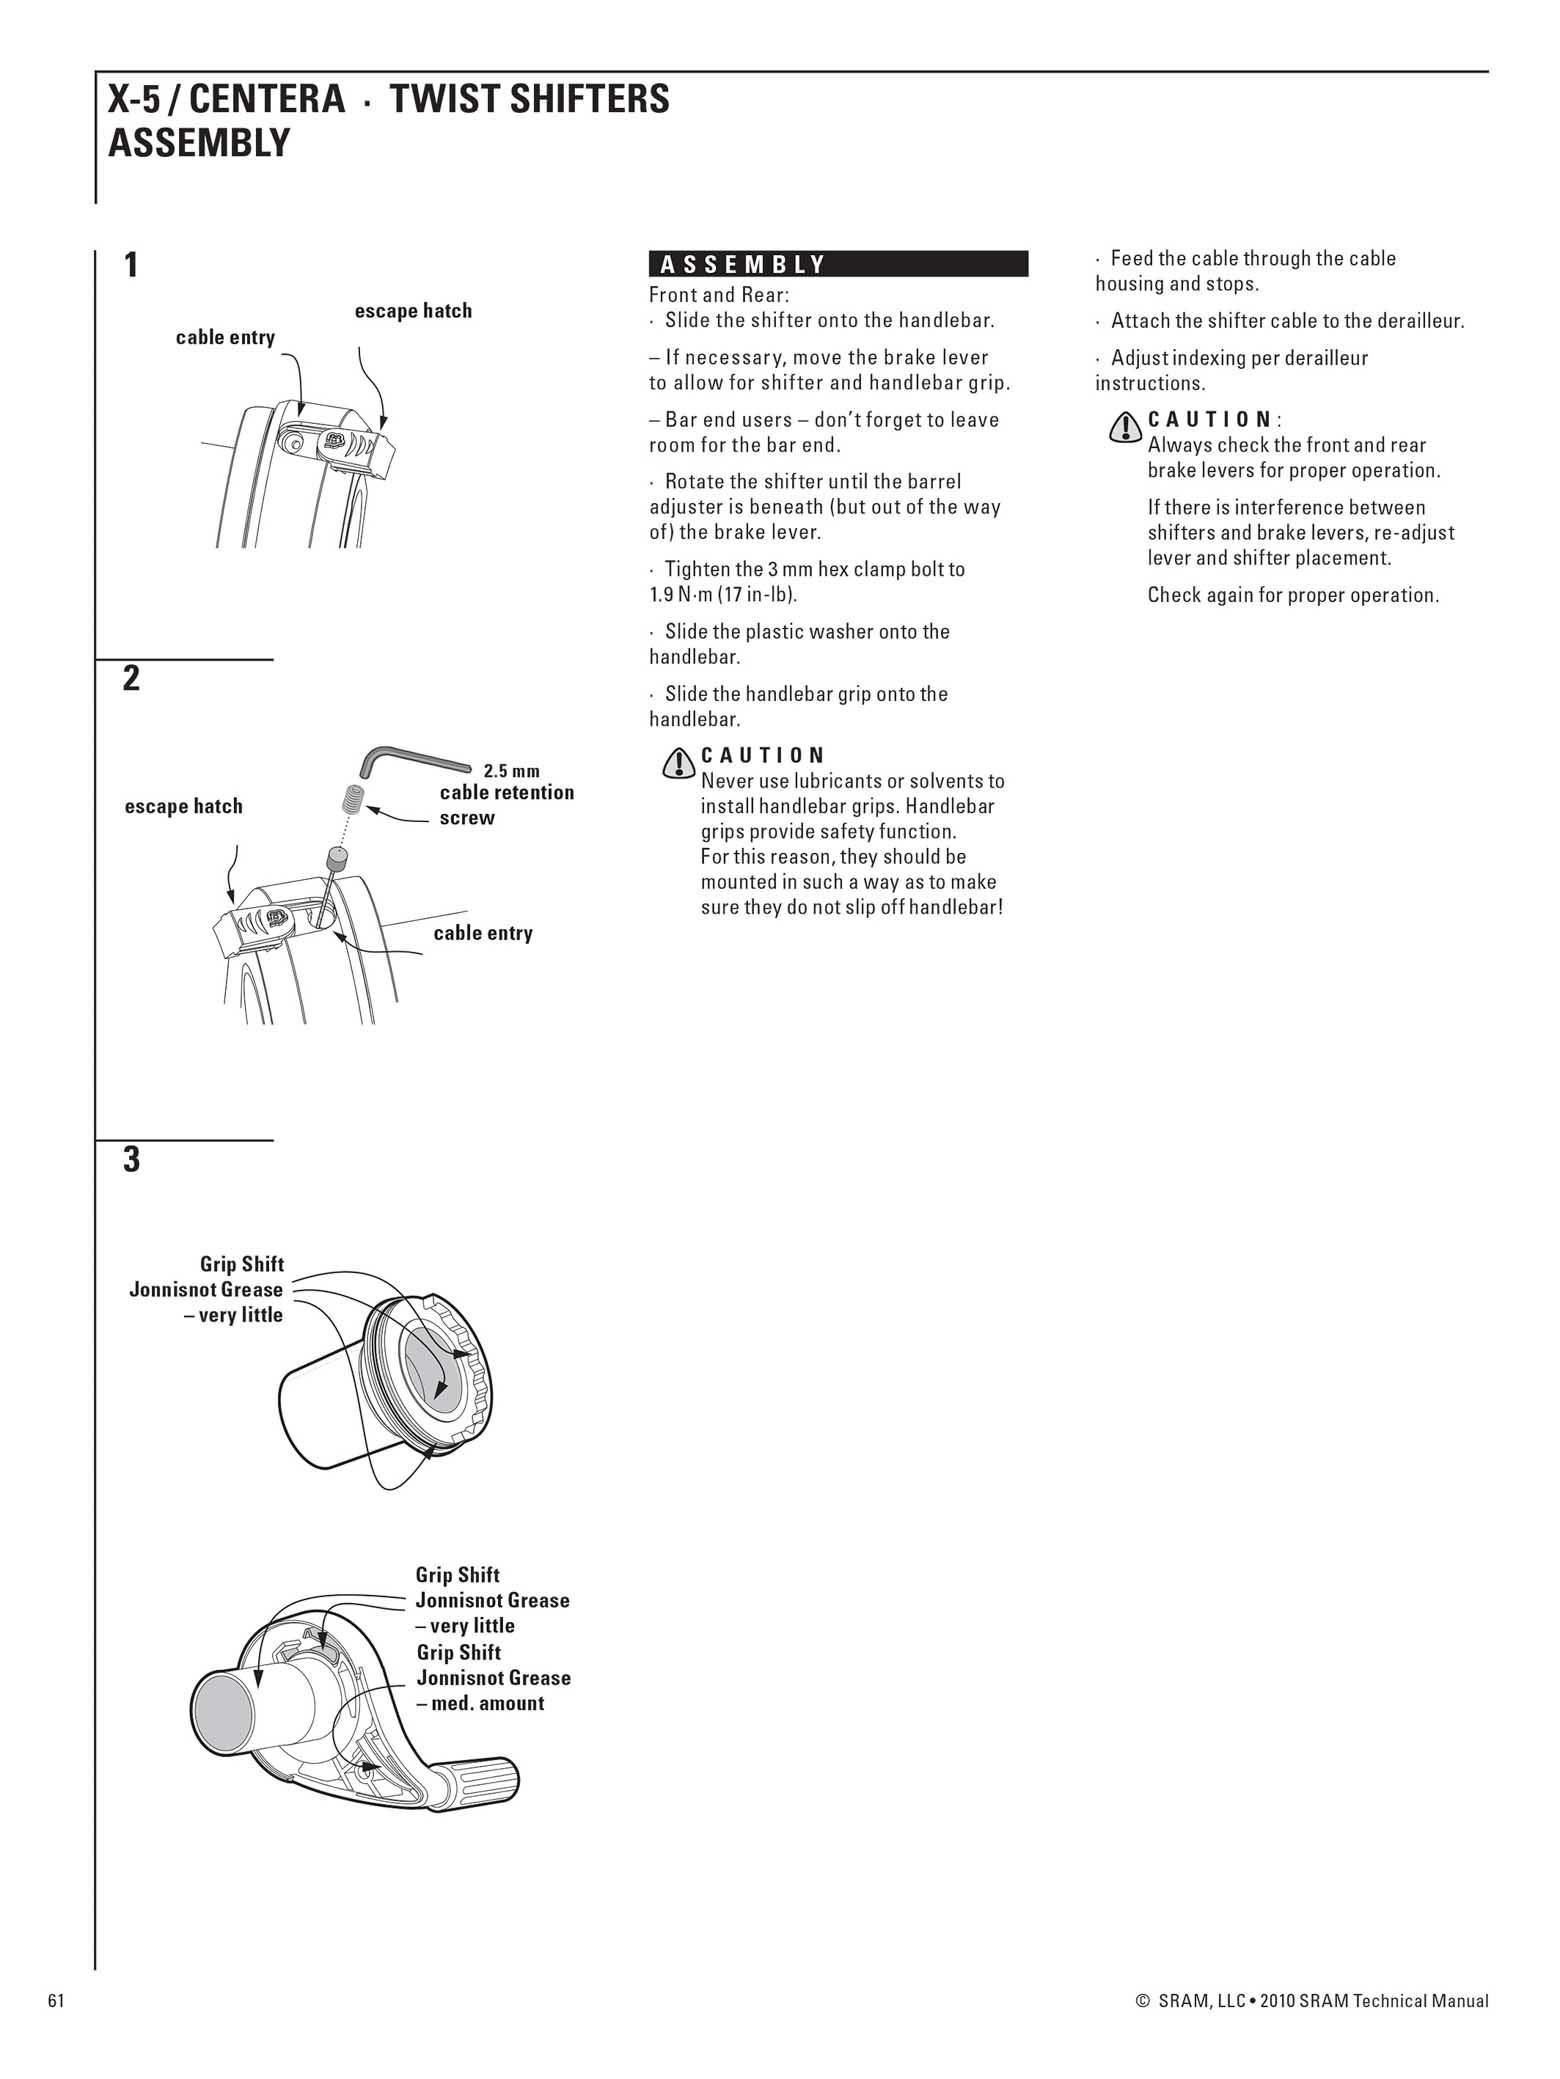 SRAM Technical Manual 2010 page 061 main image